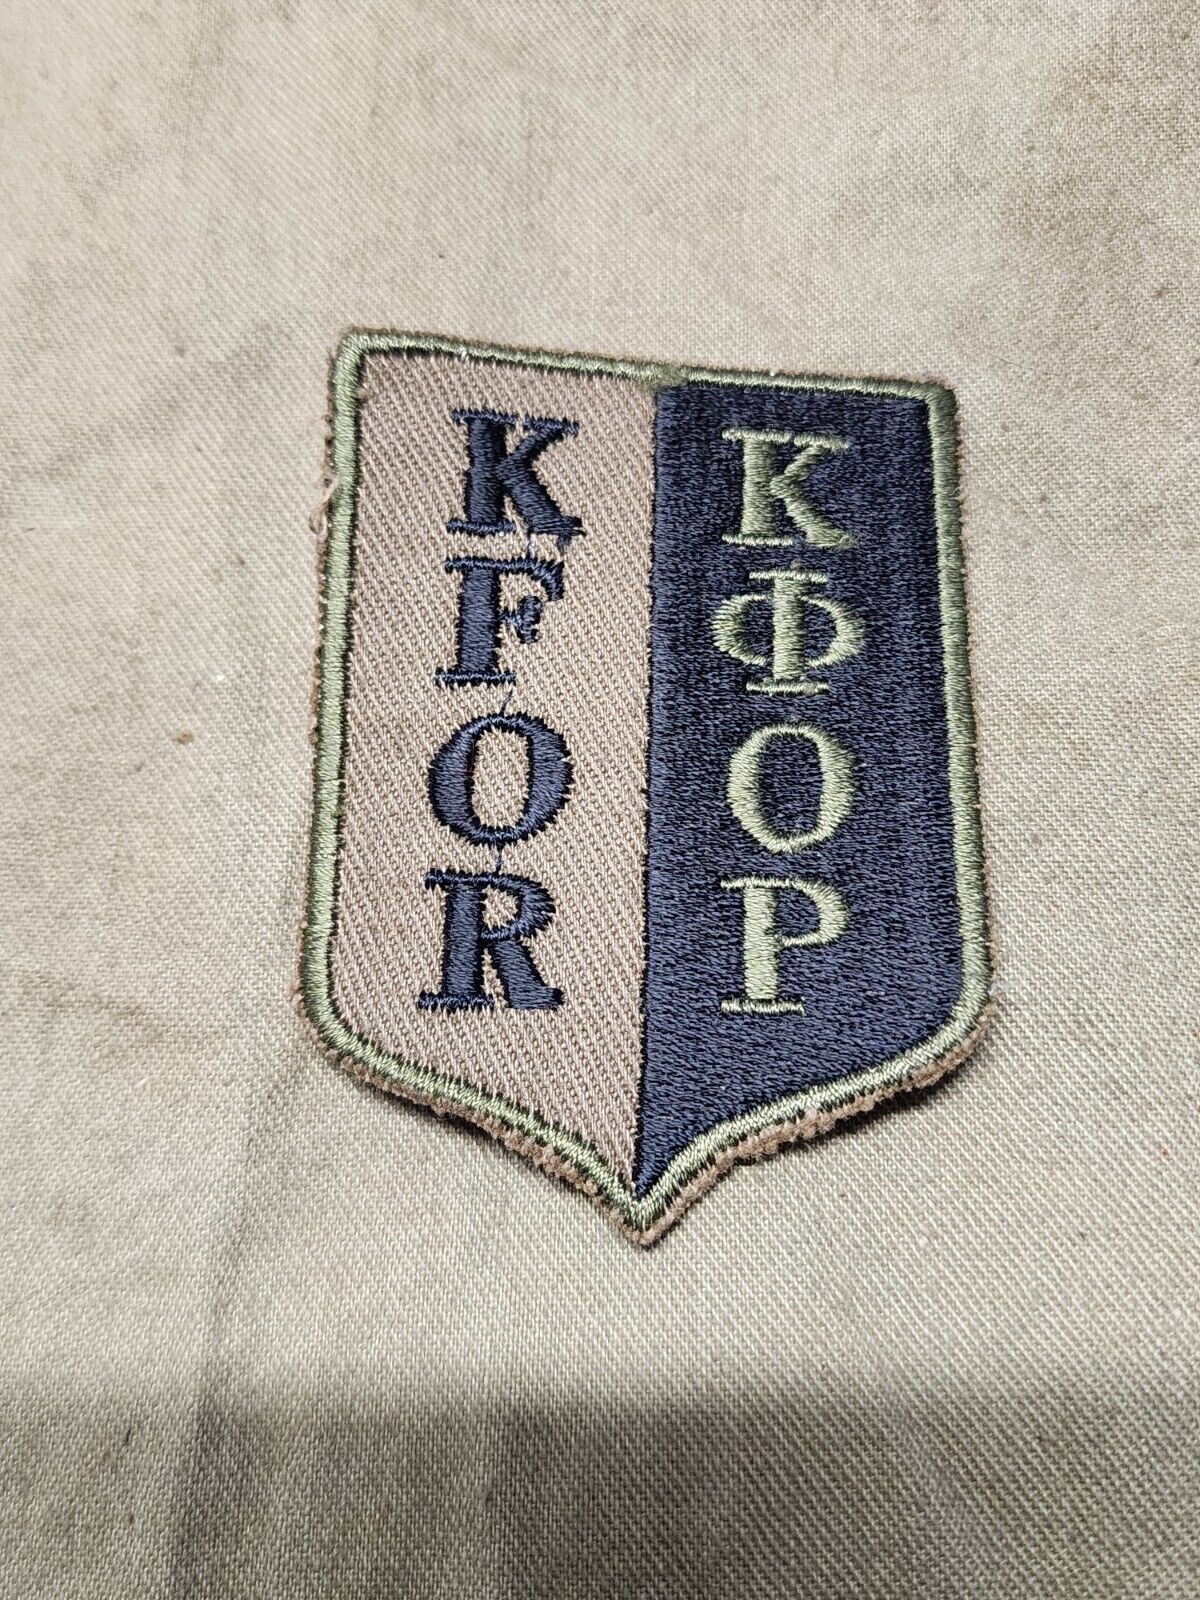 Genuine KFOR Patch NATO Kosovo Force